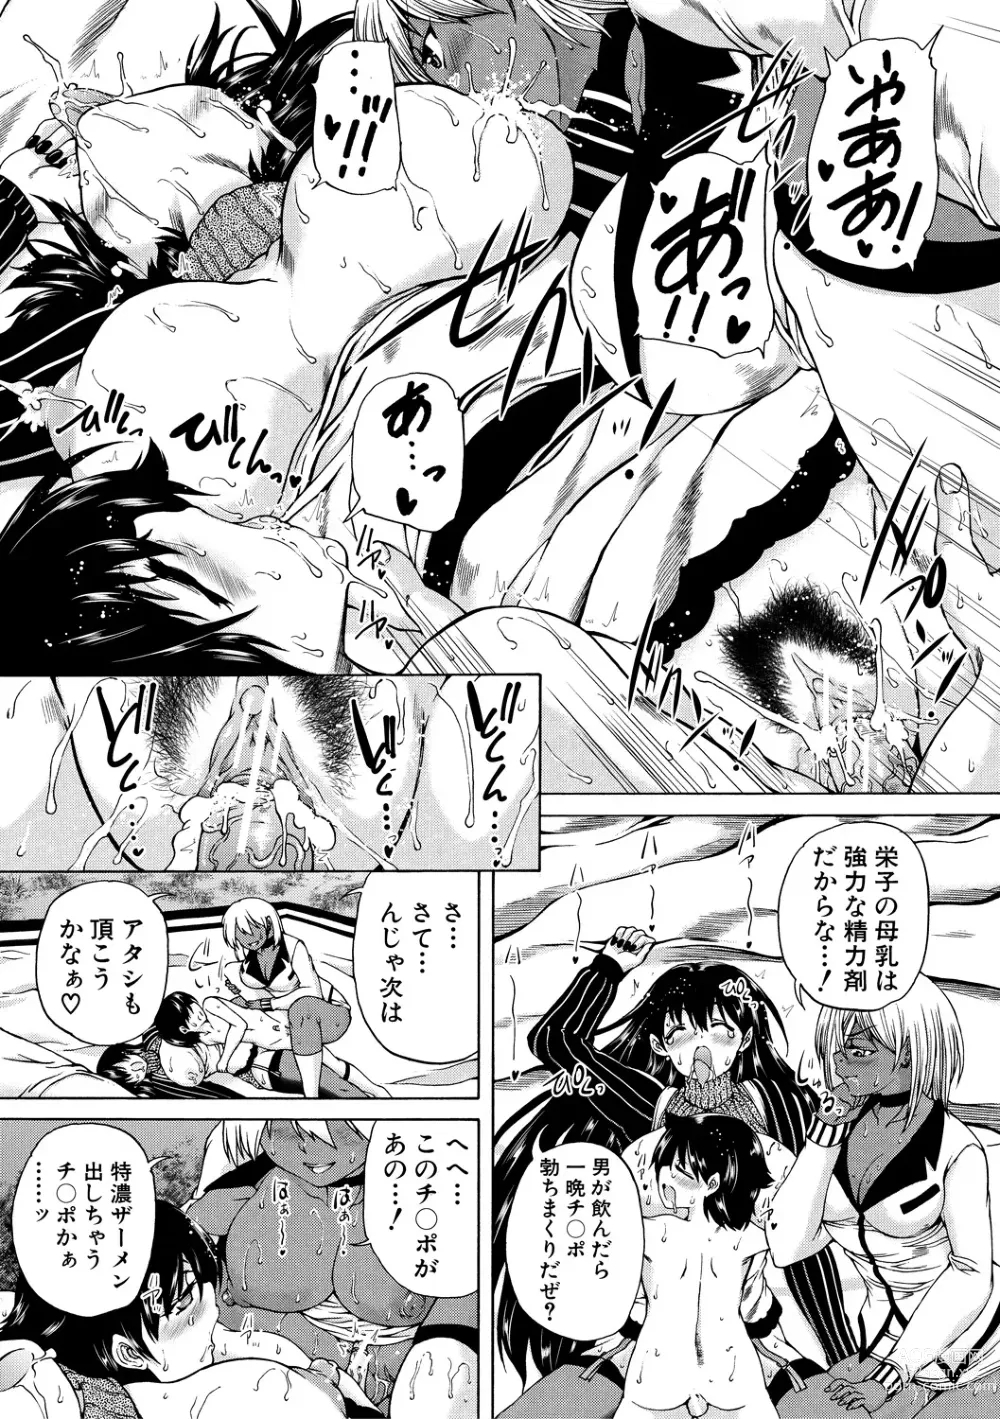 Page 29 of manga Maou Tensei Harem - Devil Reincarnation